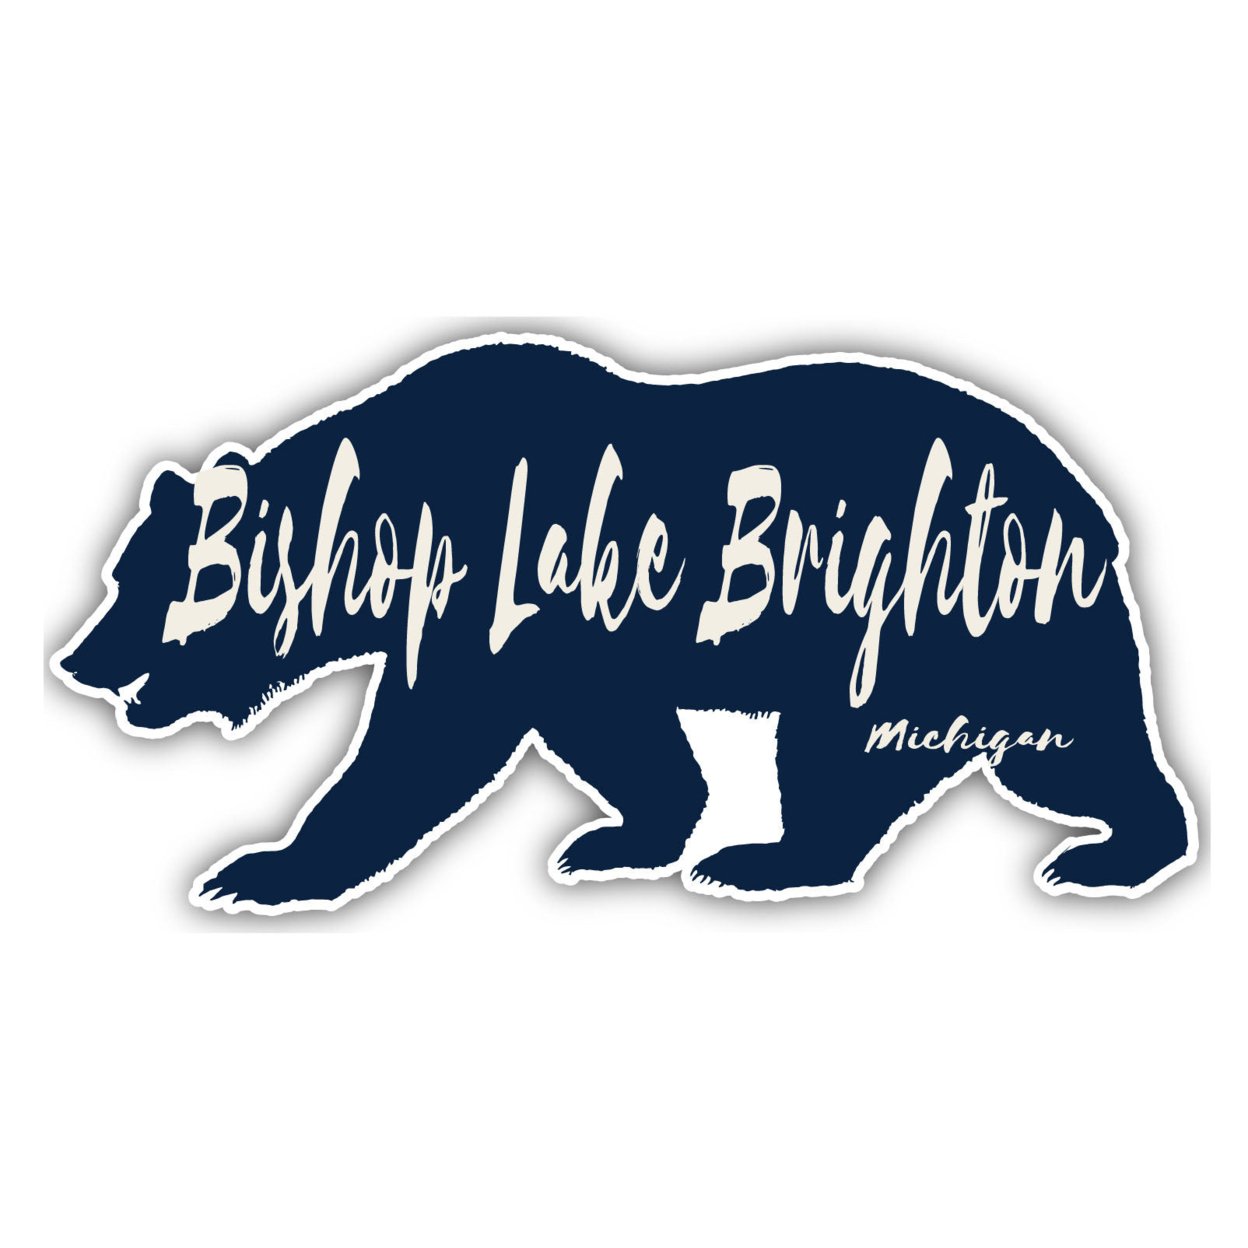 Bishop Lake Brighton Michigan Souvenir Decorative Stickers (Choose Theme And Size) - Single Unit, 2-Inch, Bear